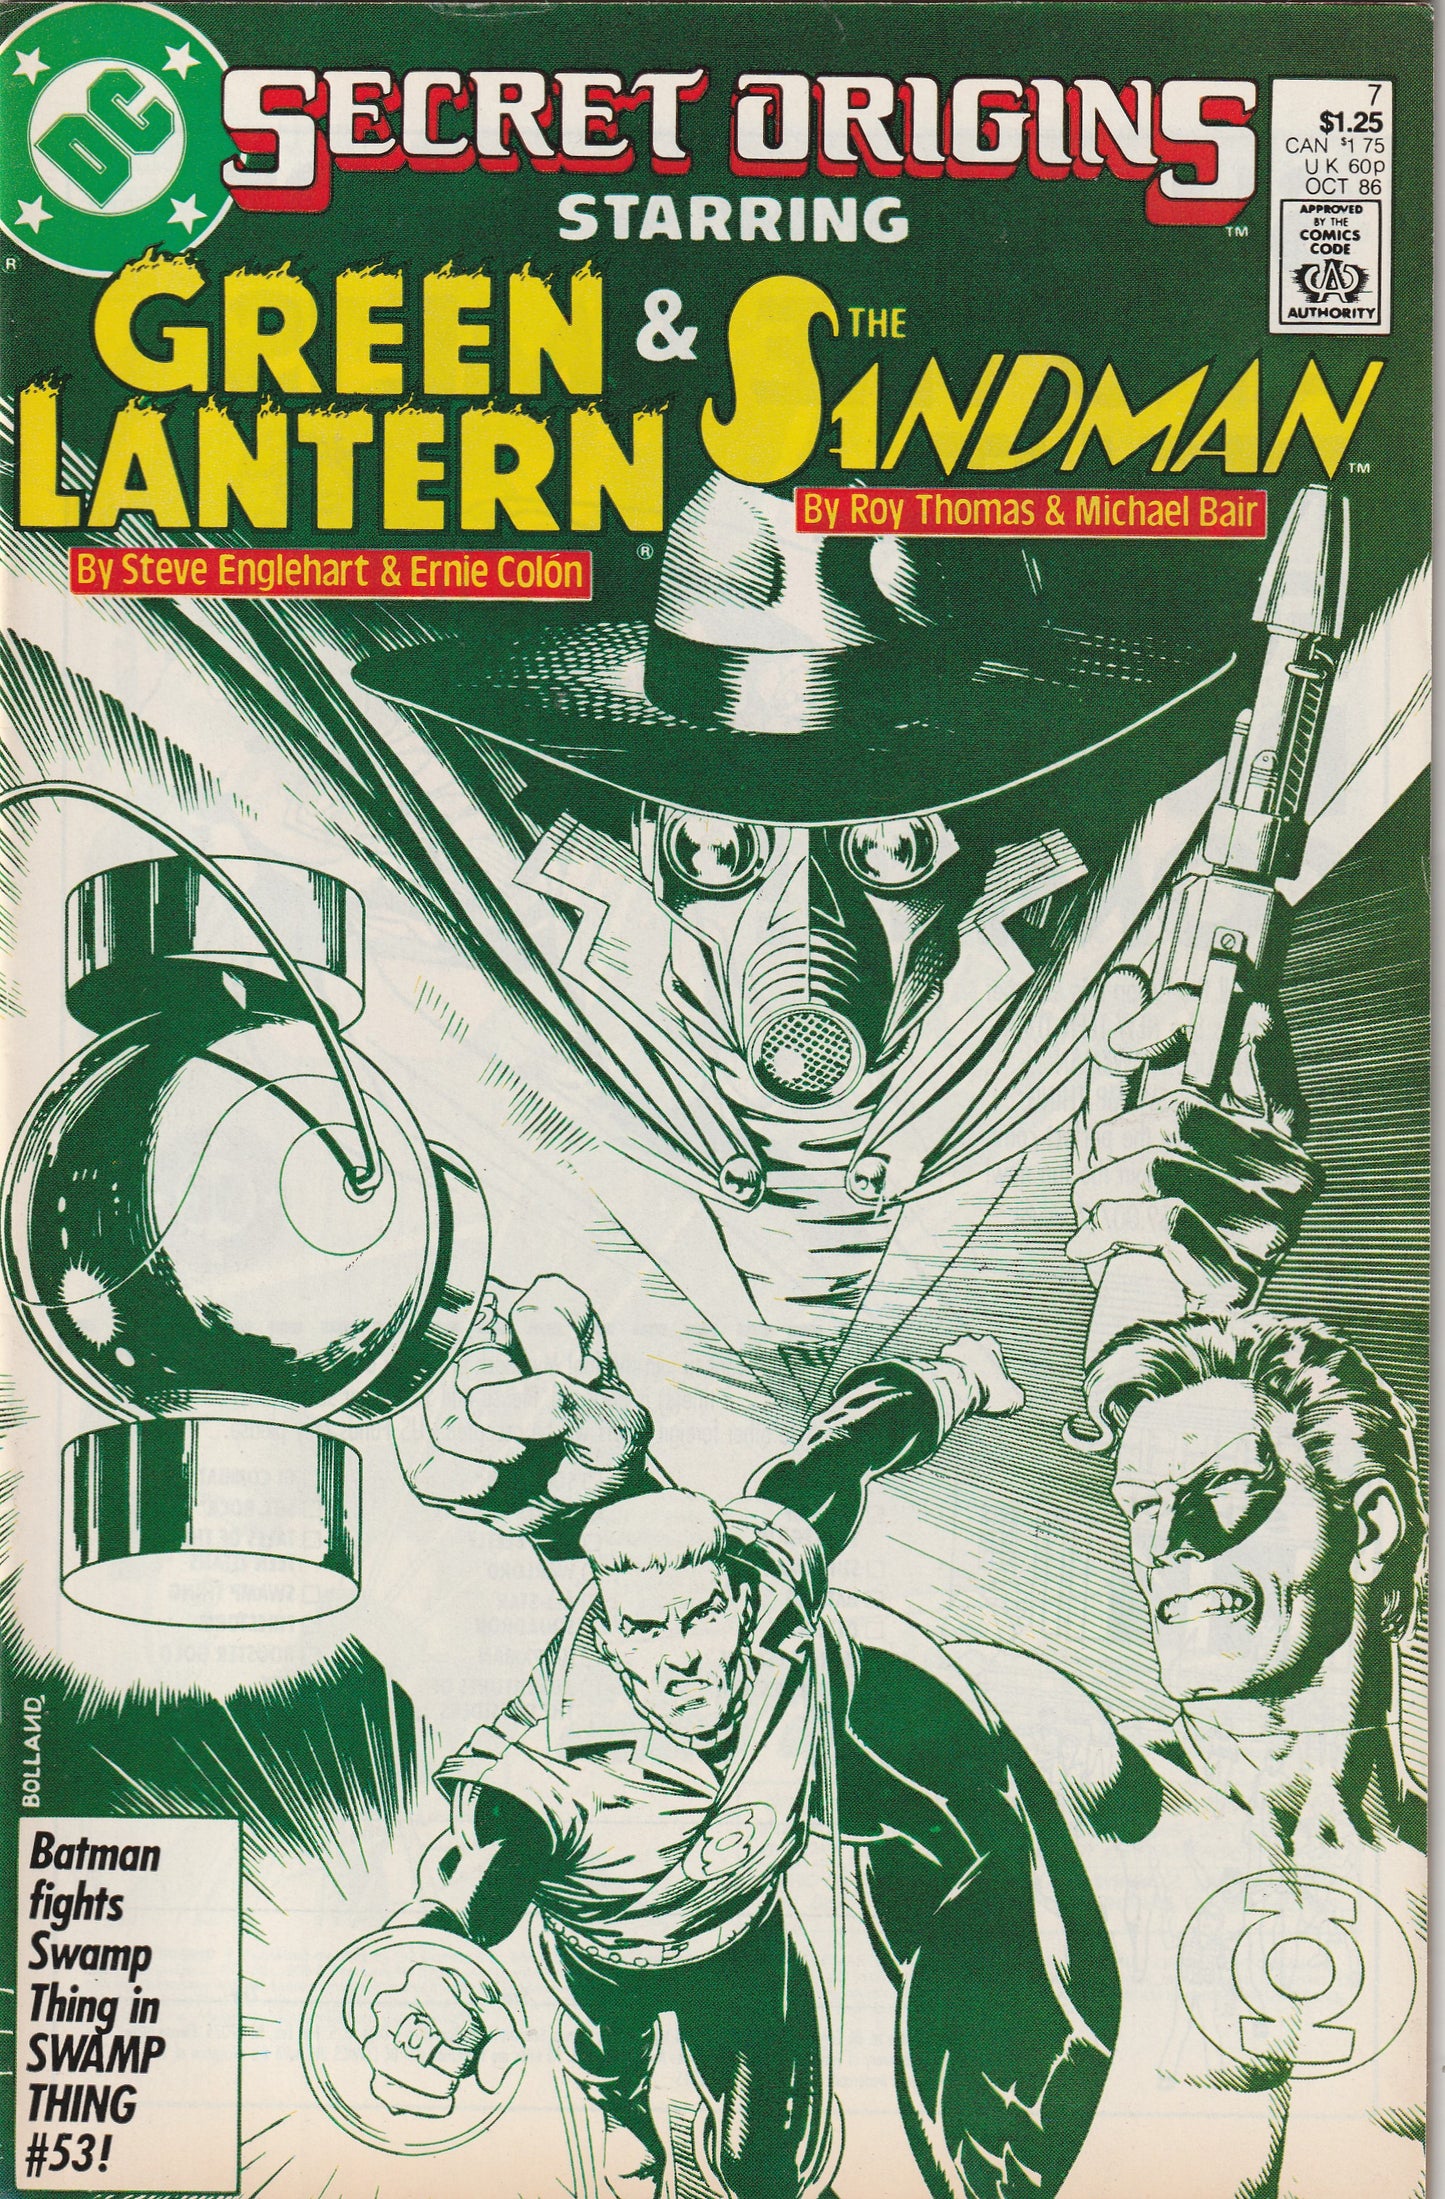 Secret Origins #7 (1986) - Green Lantern & The Sandman